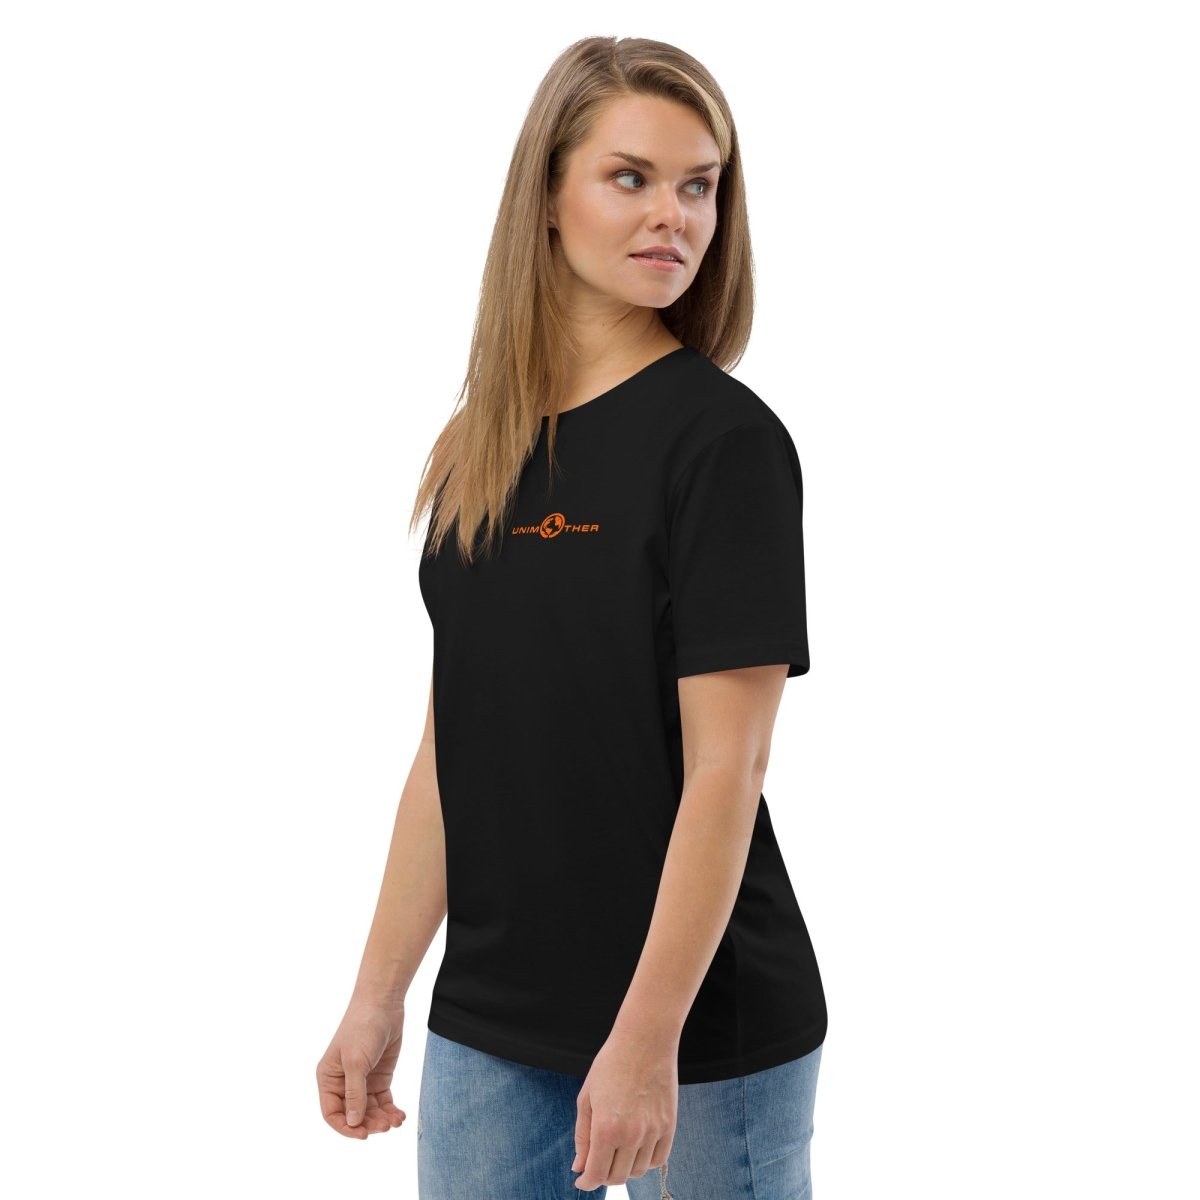 Black Unimother 100% Organic Cotton T-shirt Unisex - Unimother